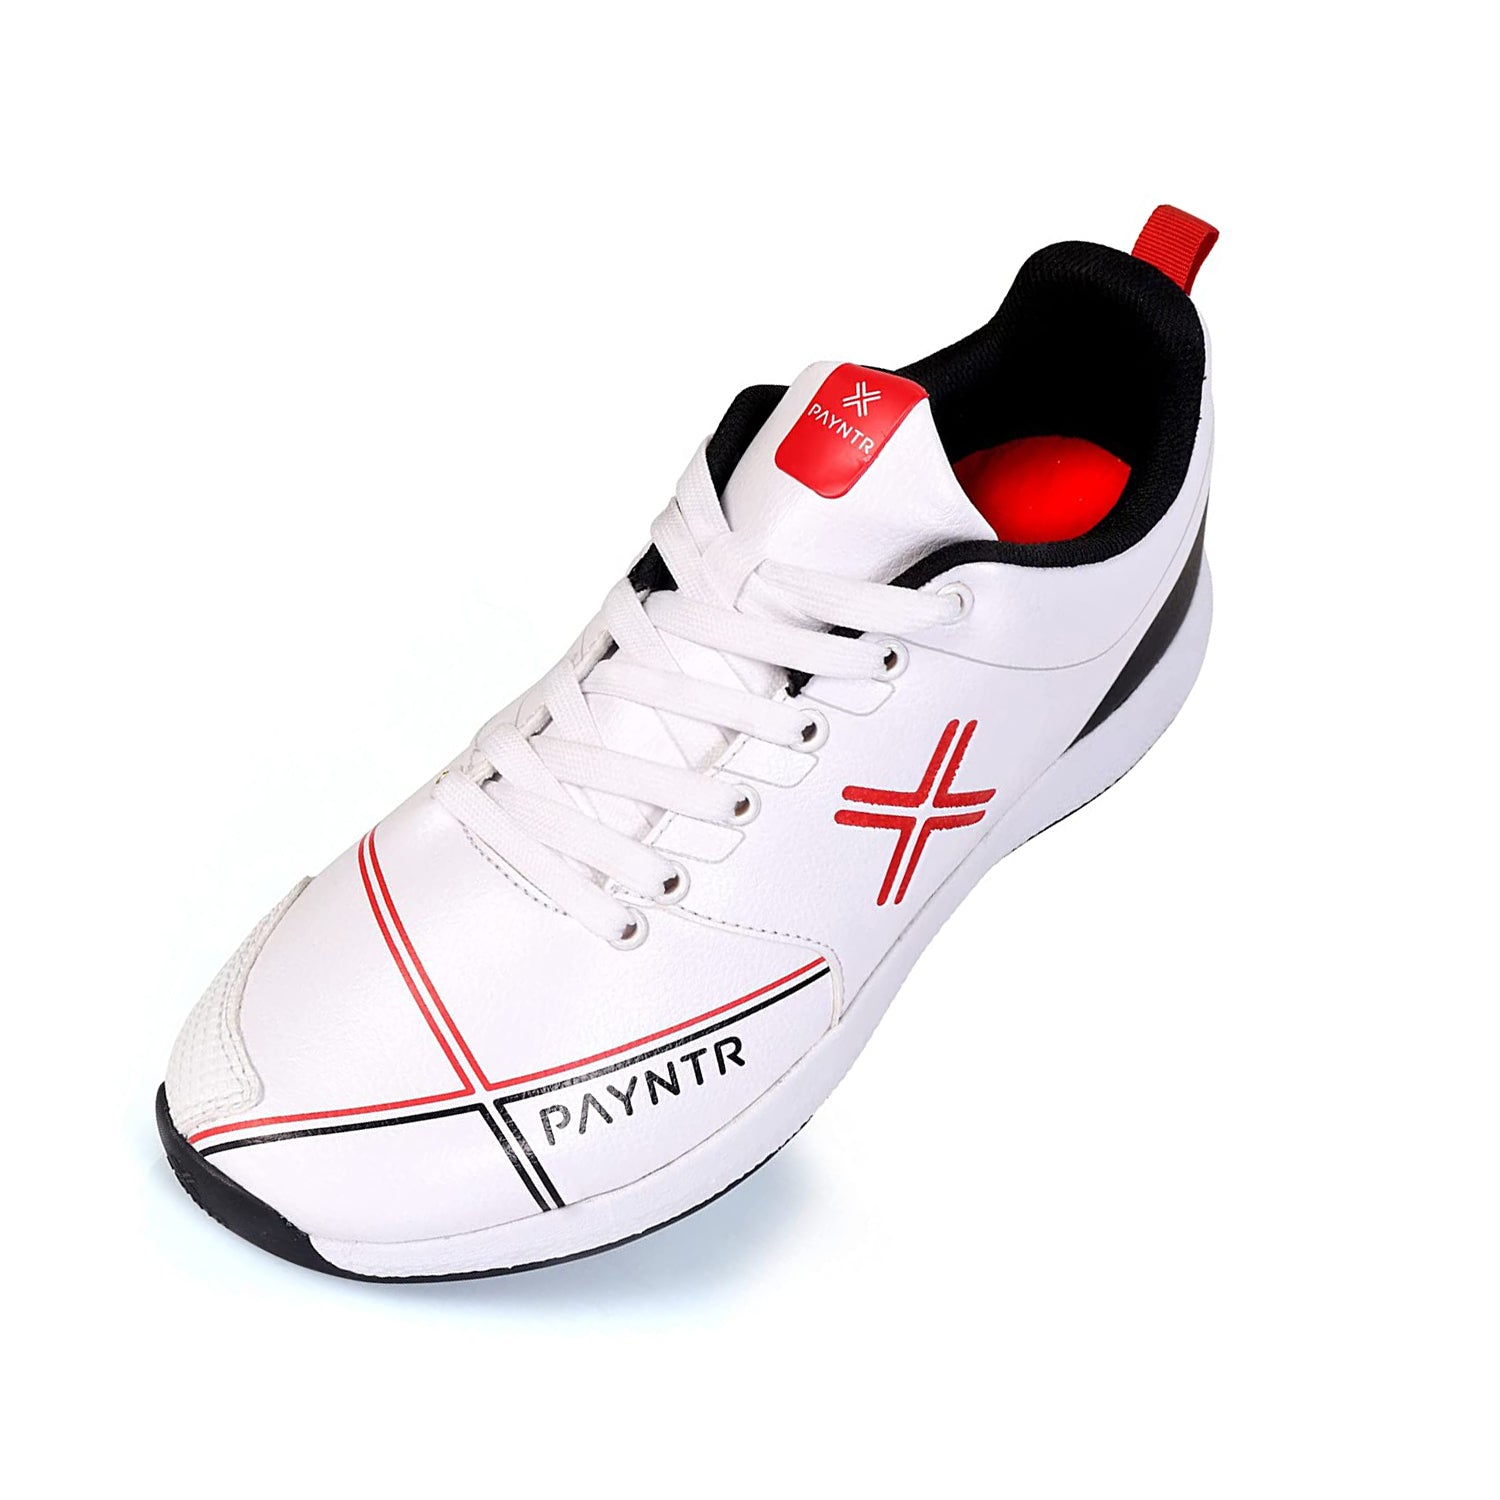 Payntr X Rubber Stud Cricket Shoes - Best Price online Prokicksports.com